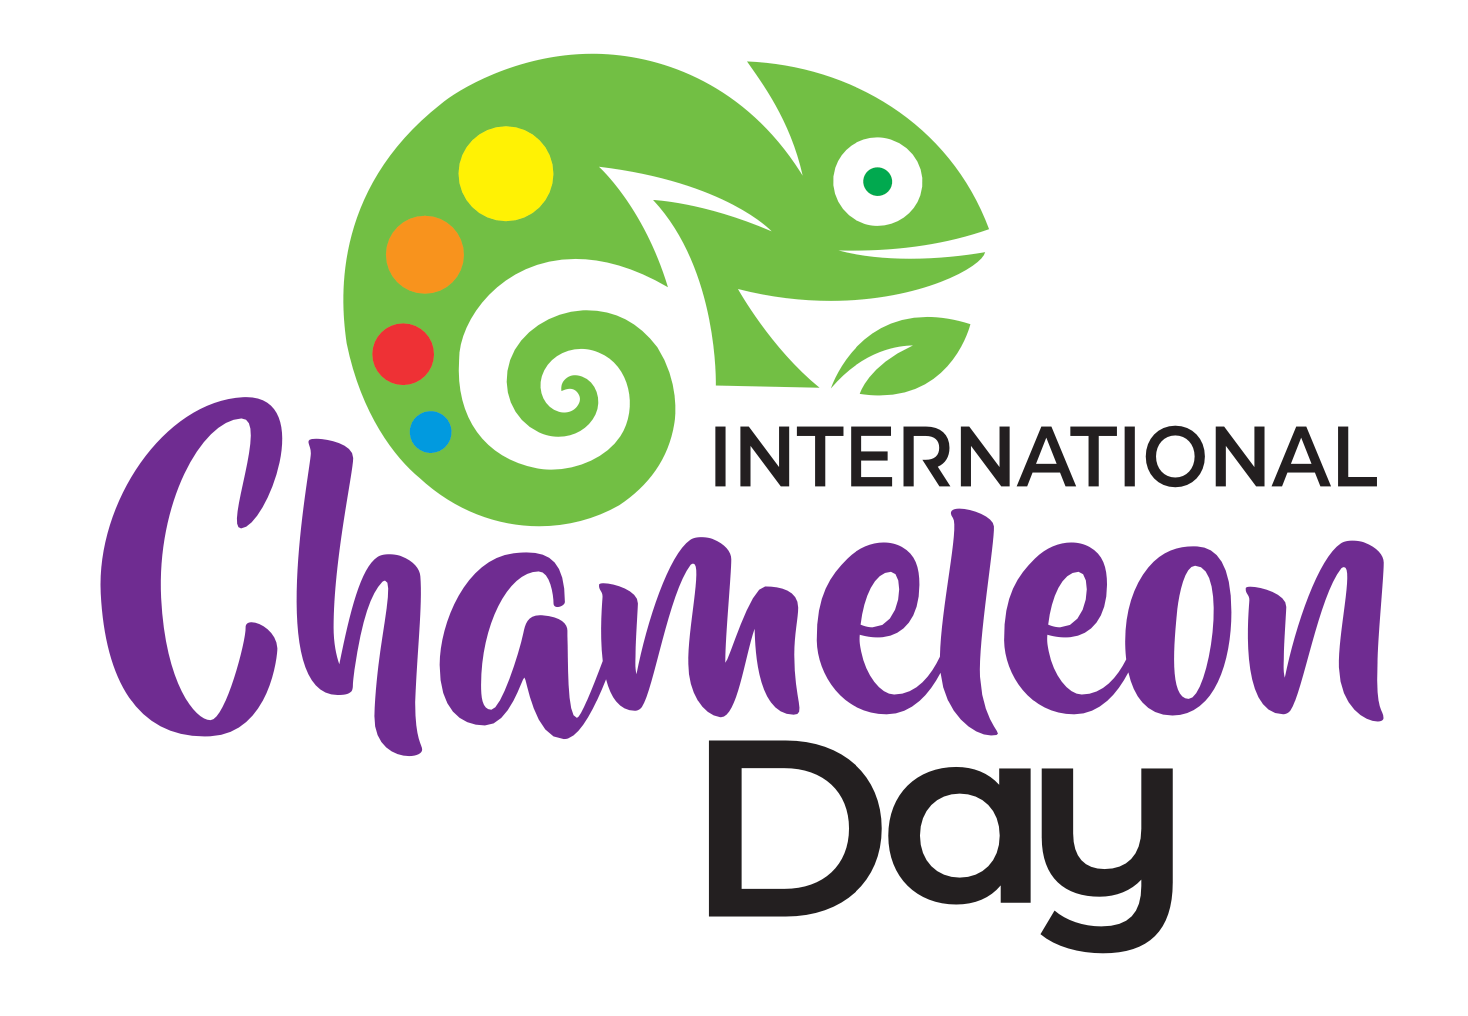 International Chameleon Day